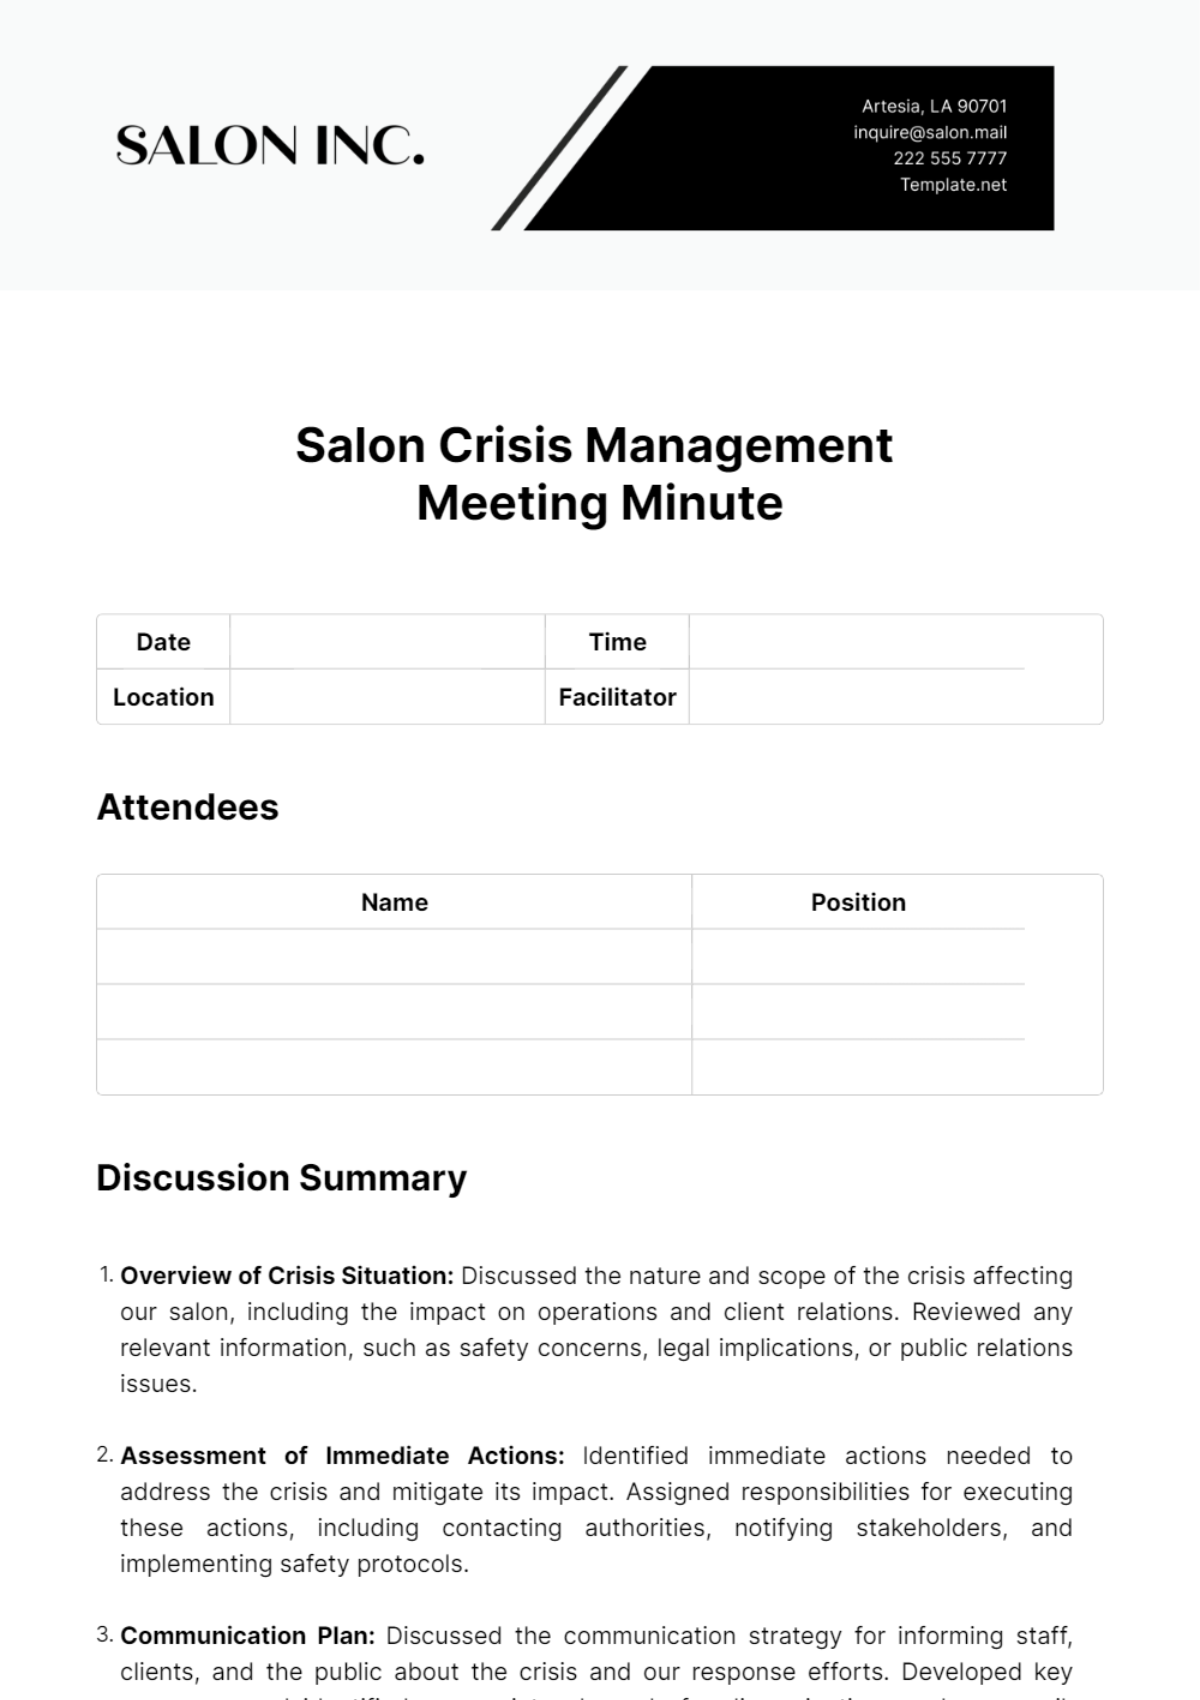 Salon Crisis Management Meeting Minute Template